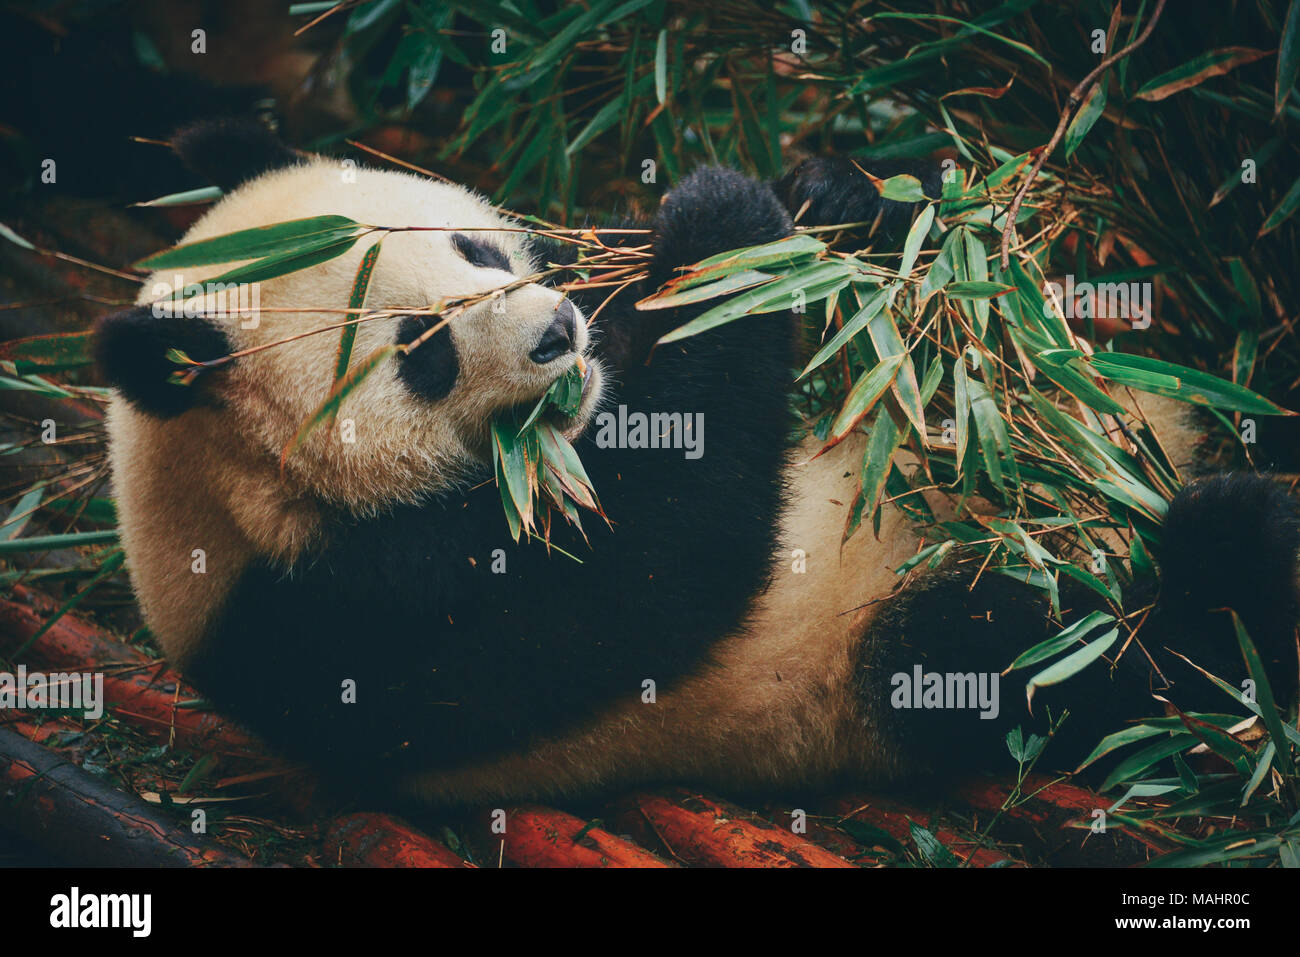 The giant panda breeding center in Chengdu, China Stock Photo